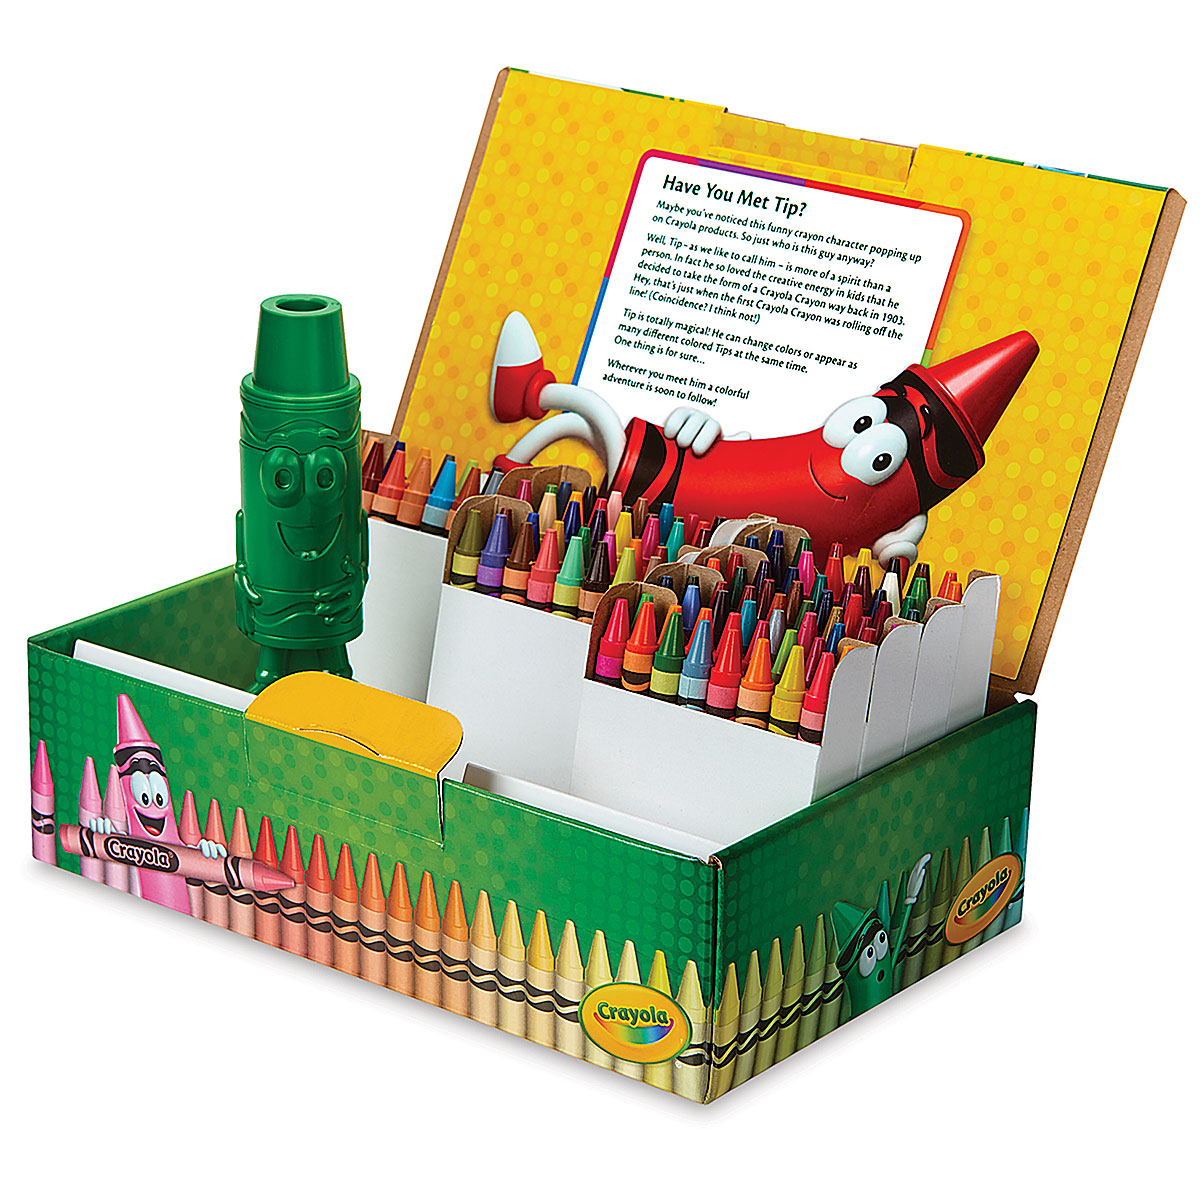 Crayola Crayons - Purple, Box of 12